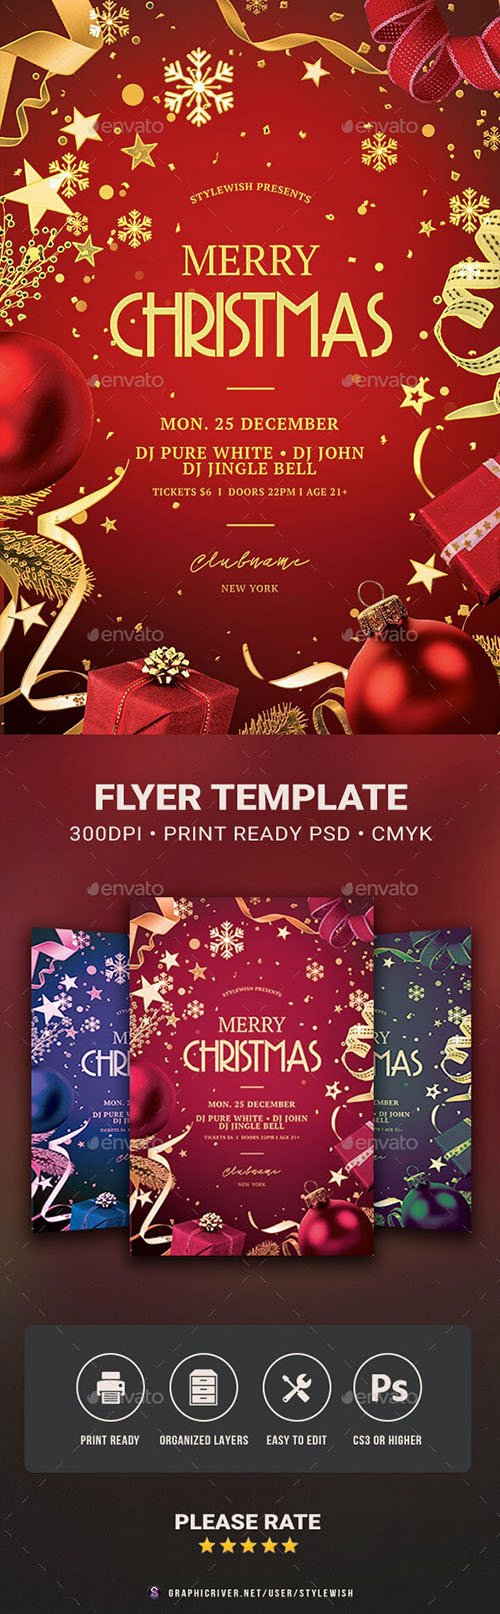 Merry Christmas Flyer 29291976